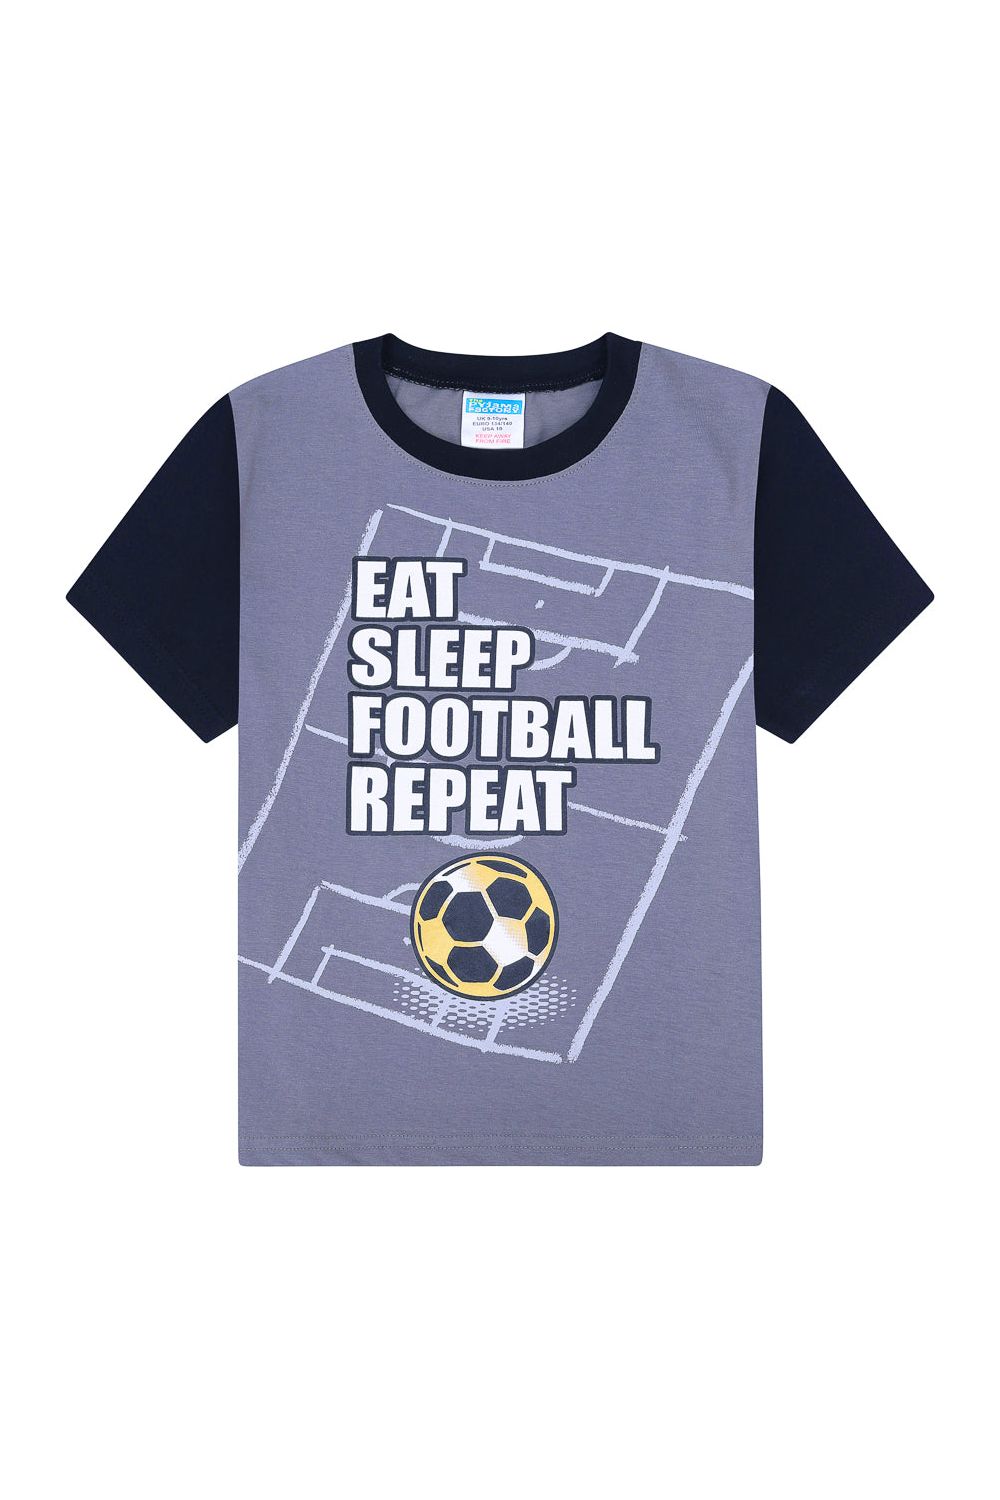 Eat Sleep Football Repeat Short  Pyjamas - Pyjamas.com